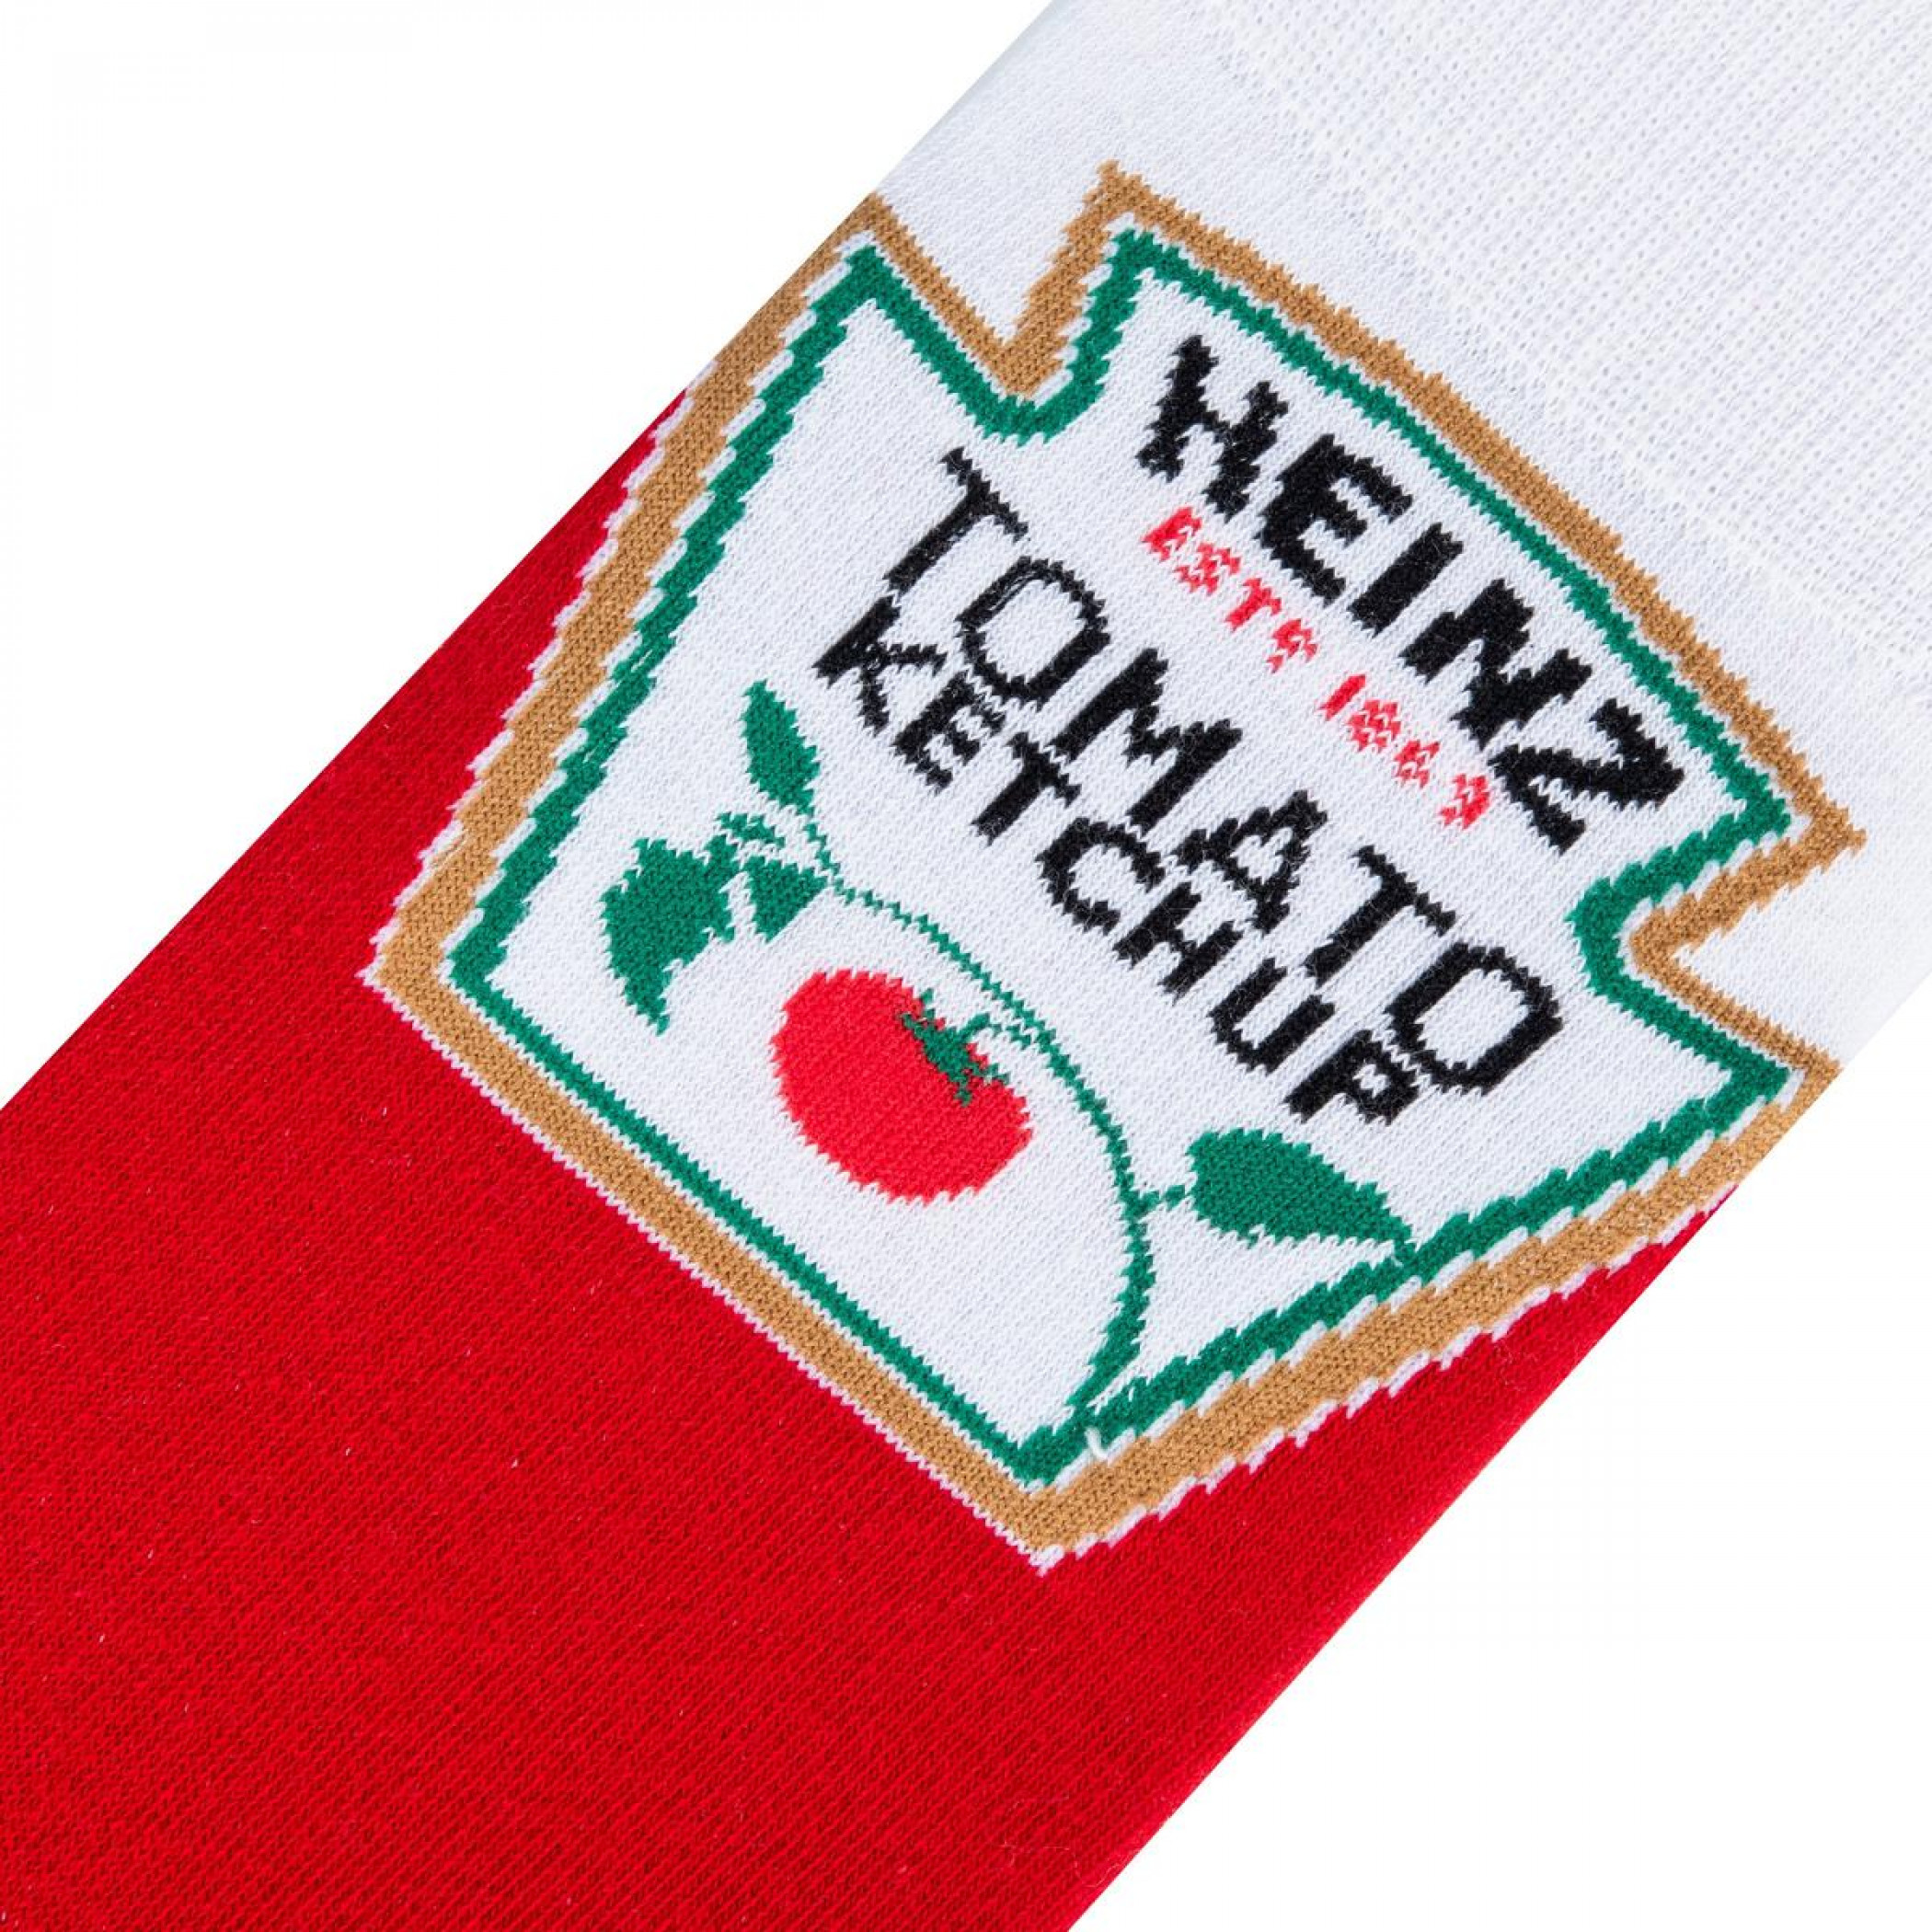 Heinz Ketchup Bottle Design & Label Crew Socks